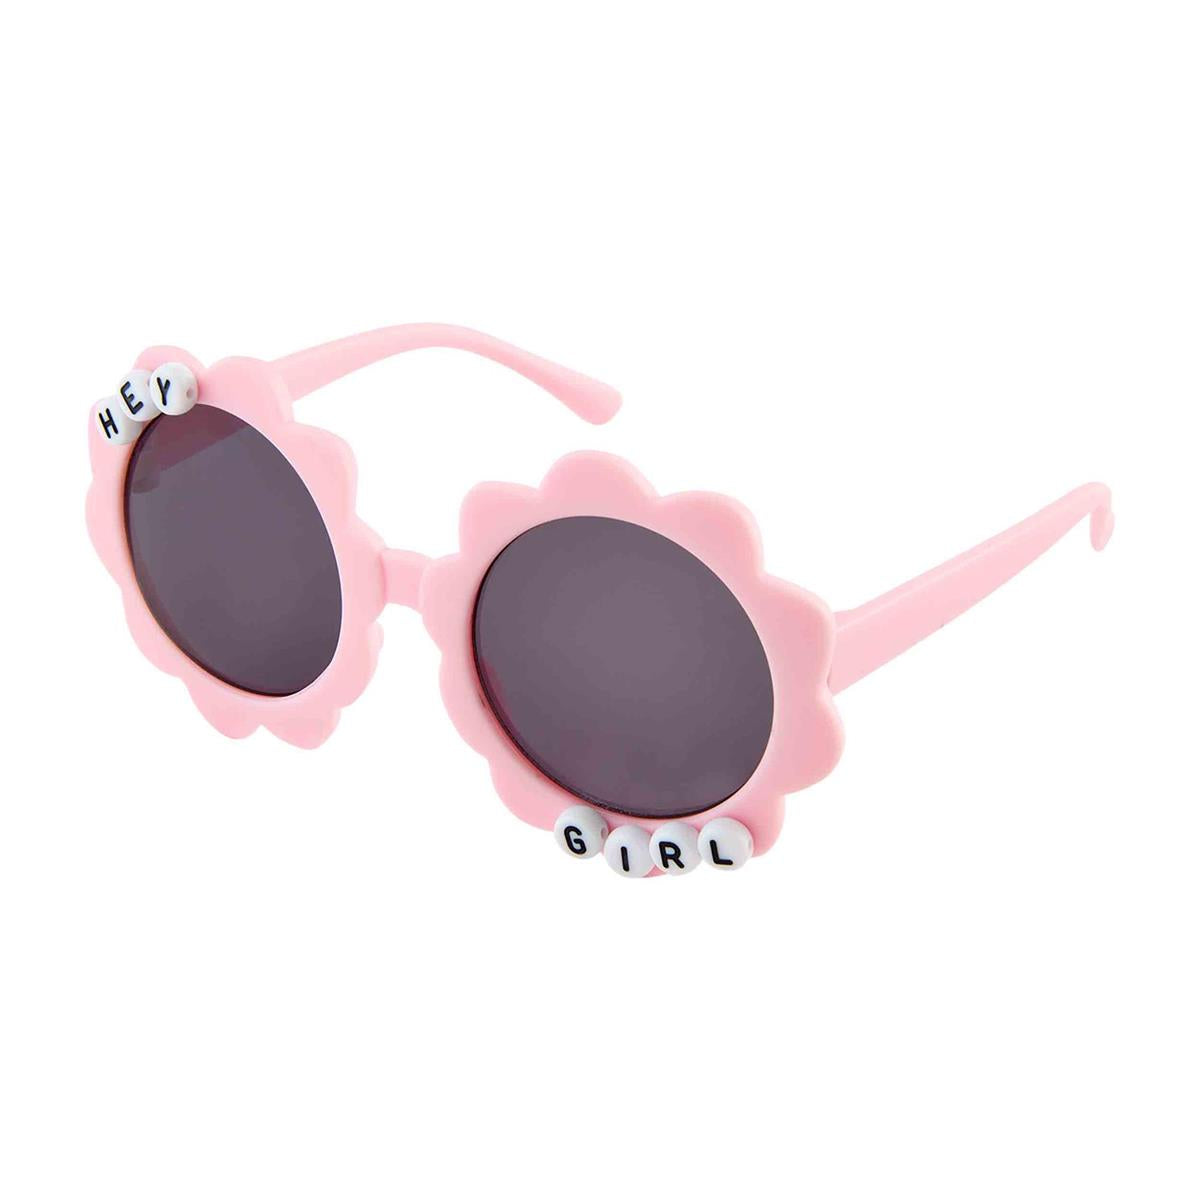 Sassy Shades Sunglasses - Hey Girl